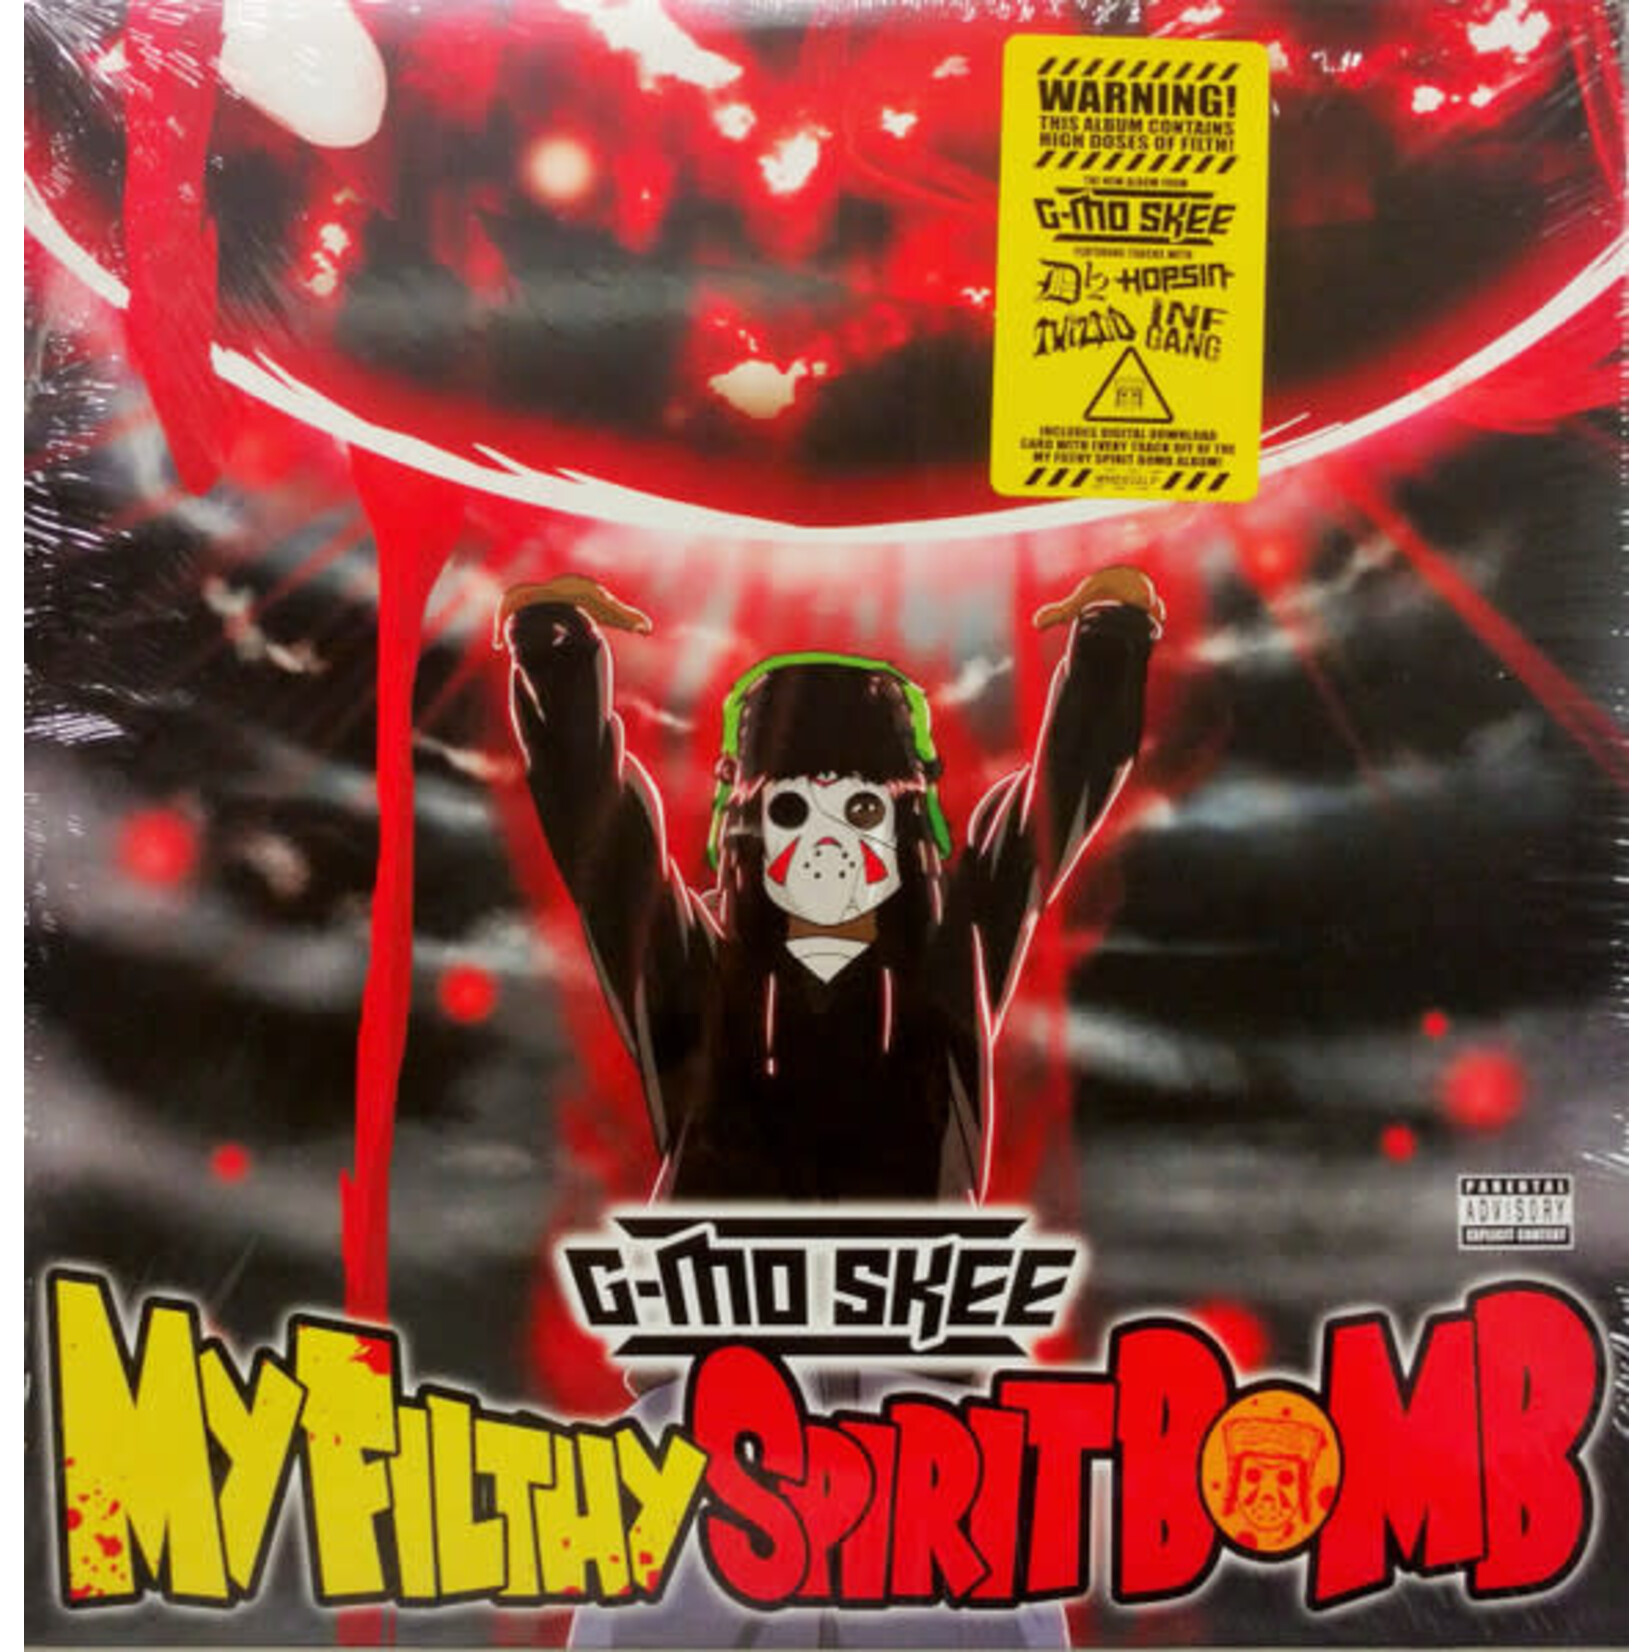 G-Mo Skee – My Filthy Spirit Bomb (VG, LP, Majik Ninja Entertainment – MNE032LP, 2016)